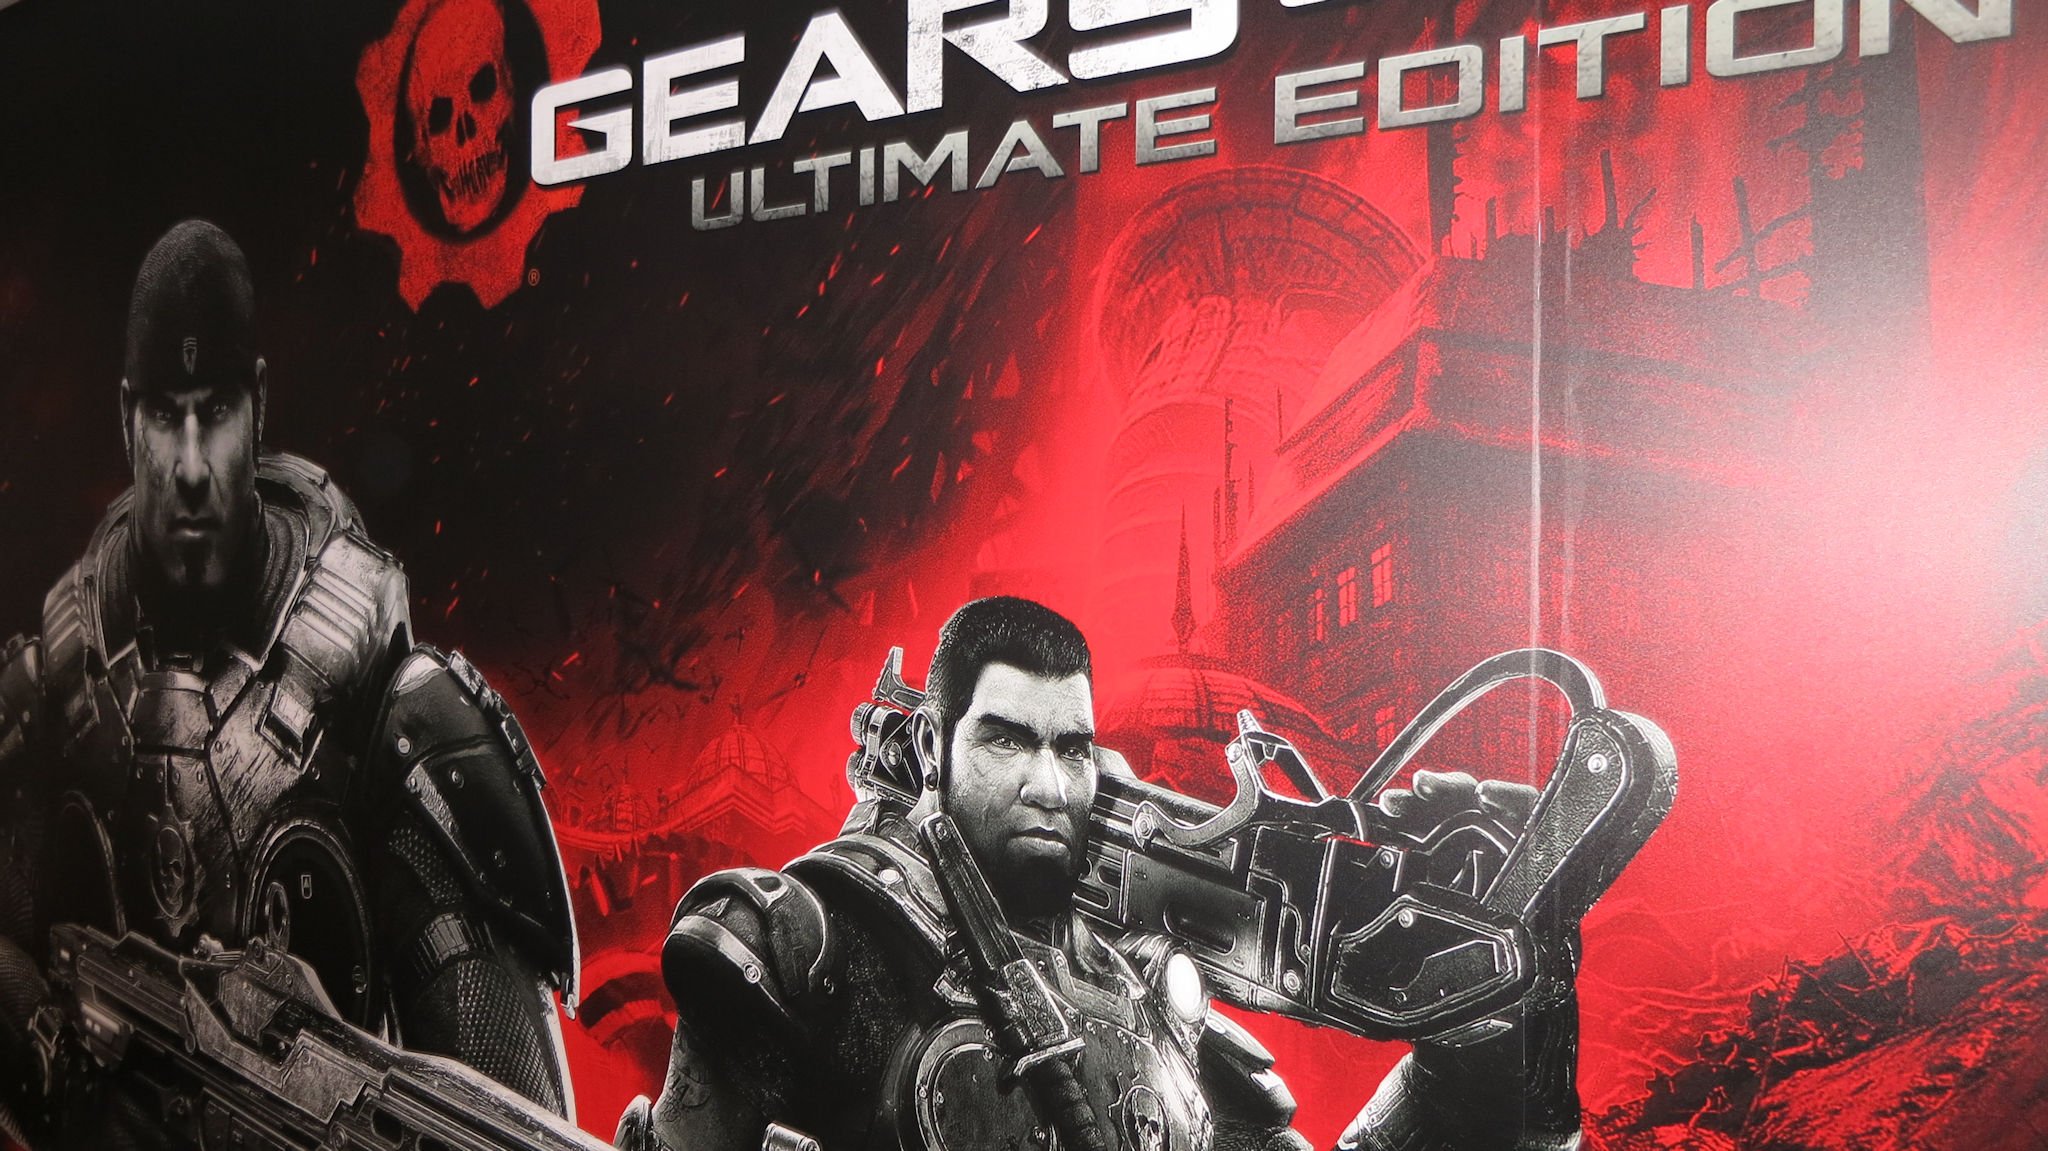 Gears of War 4 will have split-screen co-op for PC